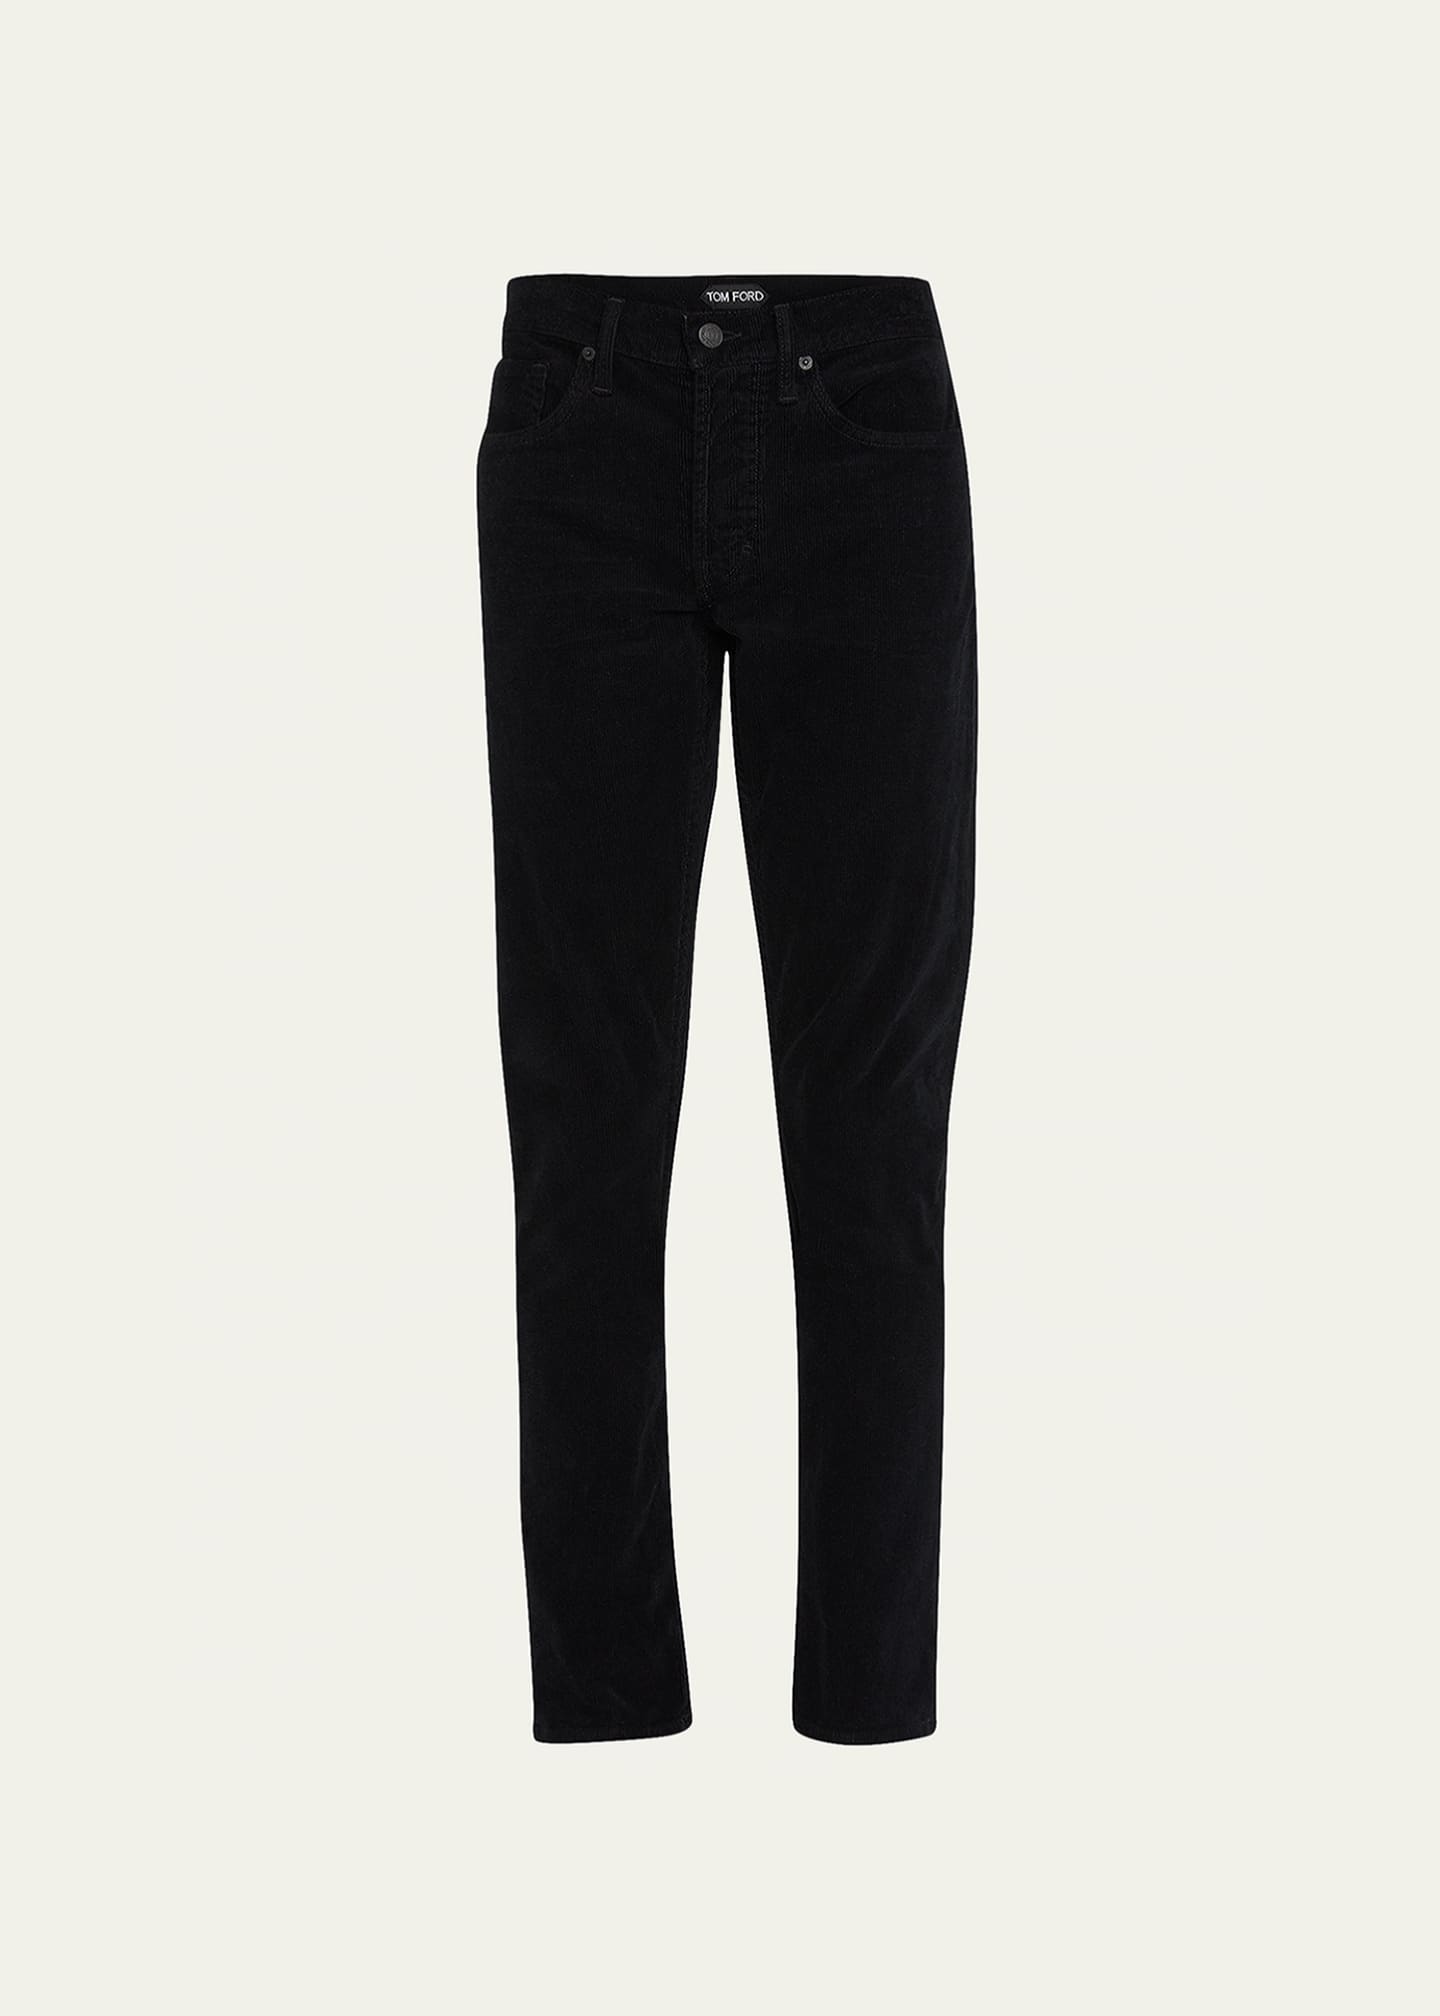 TOM FORD Men's 5-Pocket Slim-Fit Jeans - Bergdorf Goodman